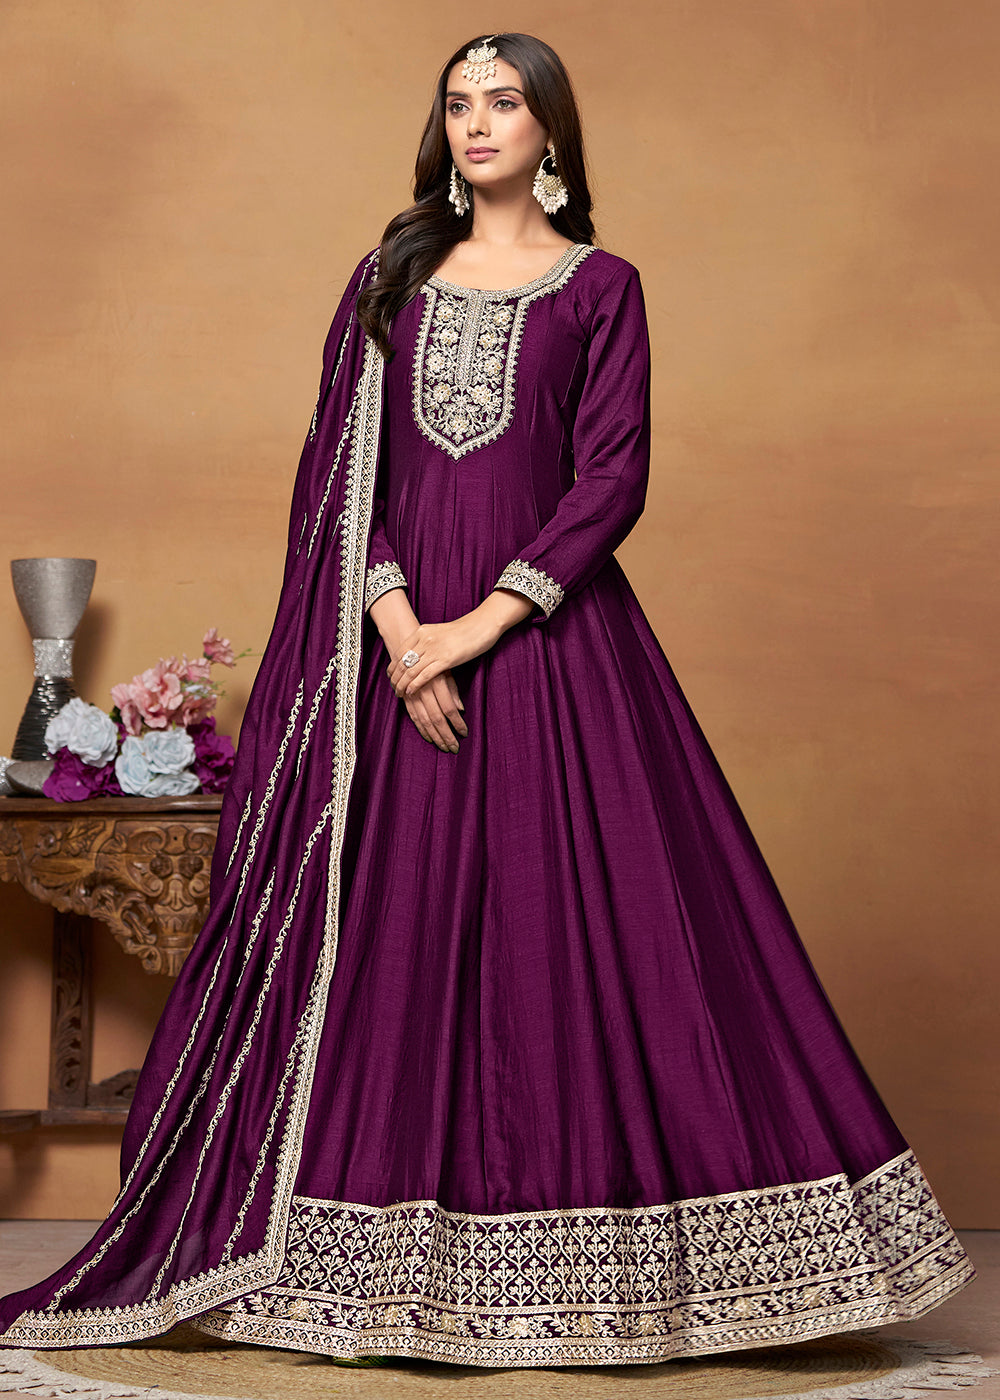 Buy Now Amazing Art Silk Purple Embroidered Festive Anarkali Suit Online in USA, UK, Australia, New Zealand, Canada & Worldwide at Empress Clothing.